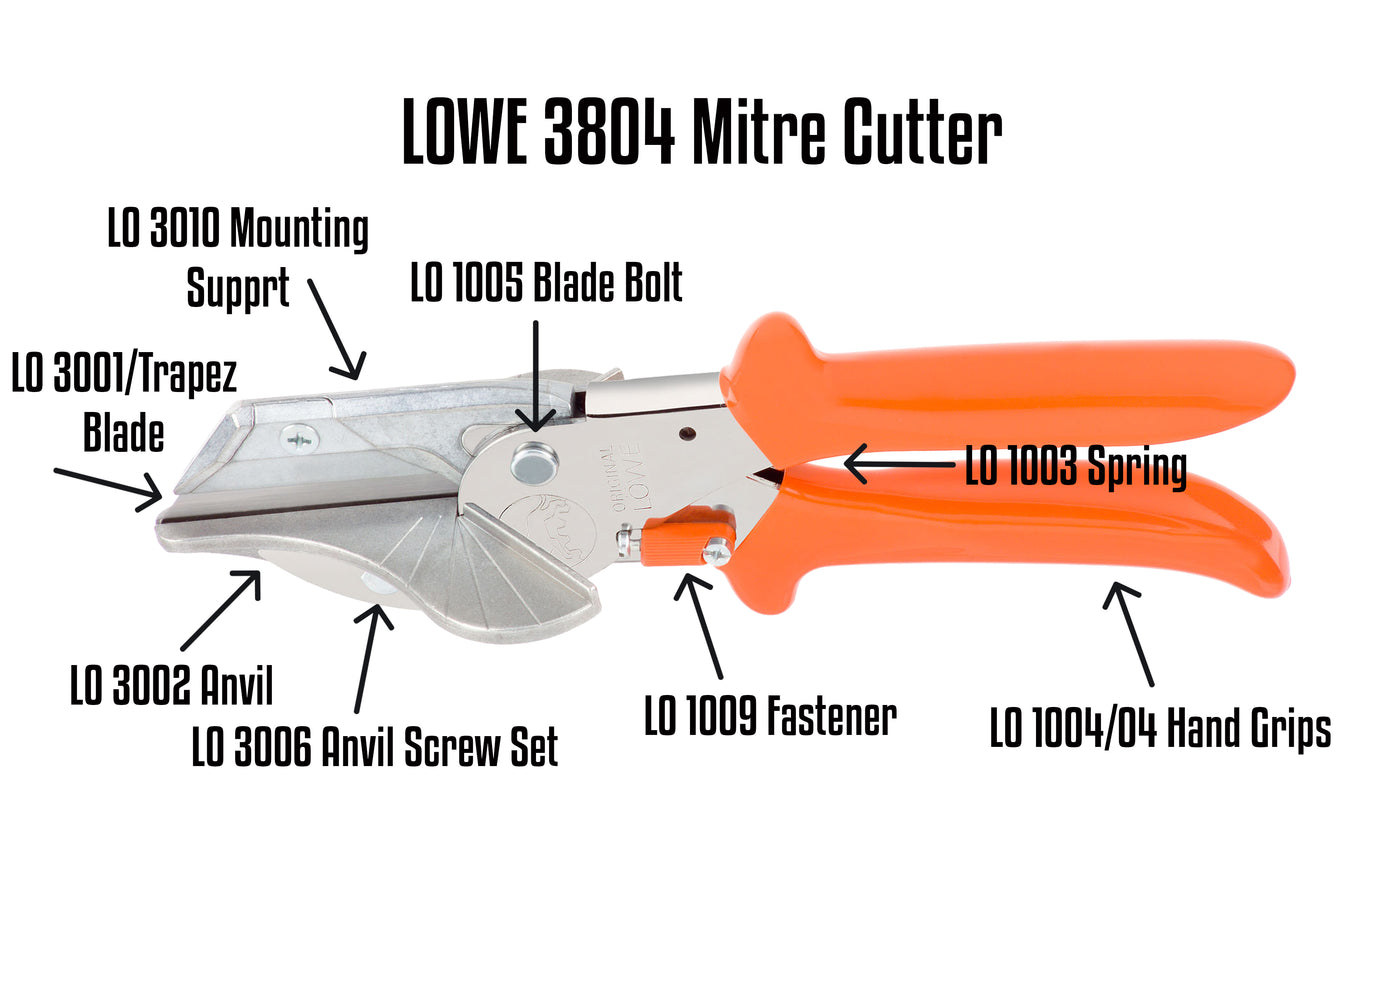 LO 3804 Mitre Cutter